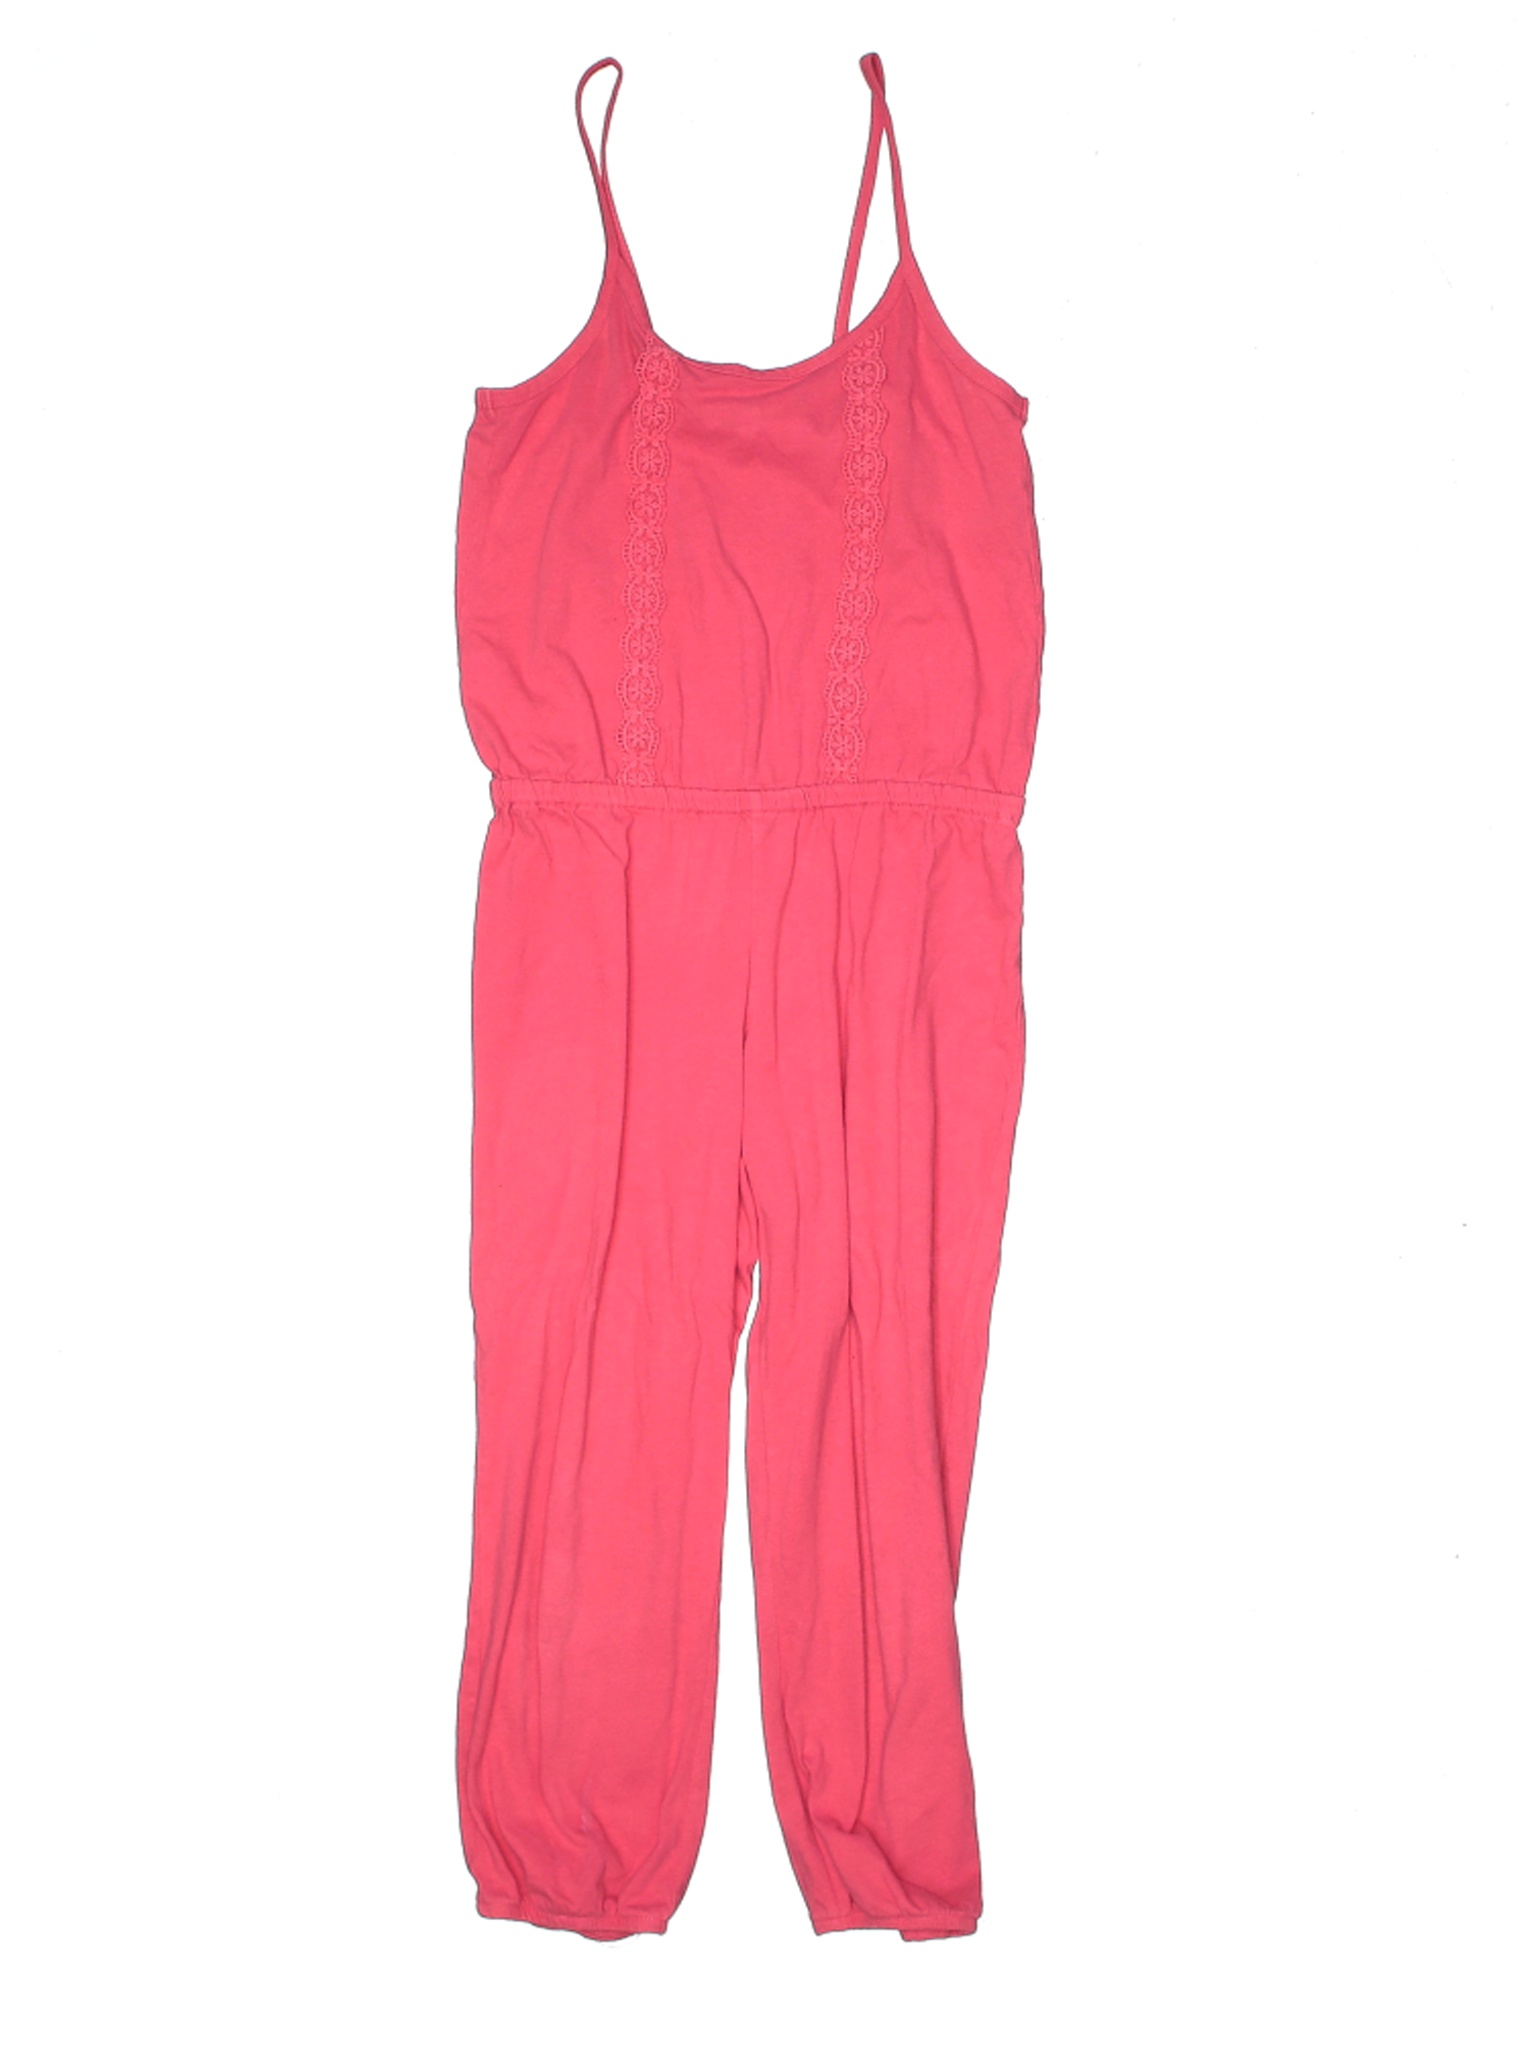 The Children's Place Girls Pink Jumpsuit 7 | eBay